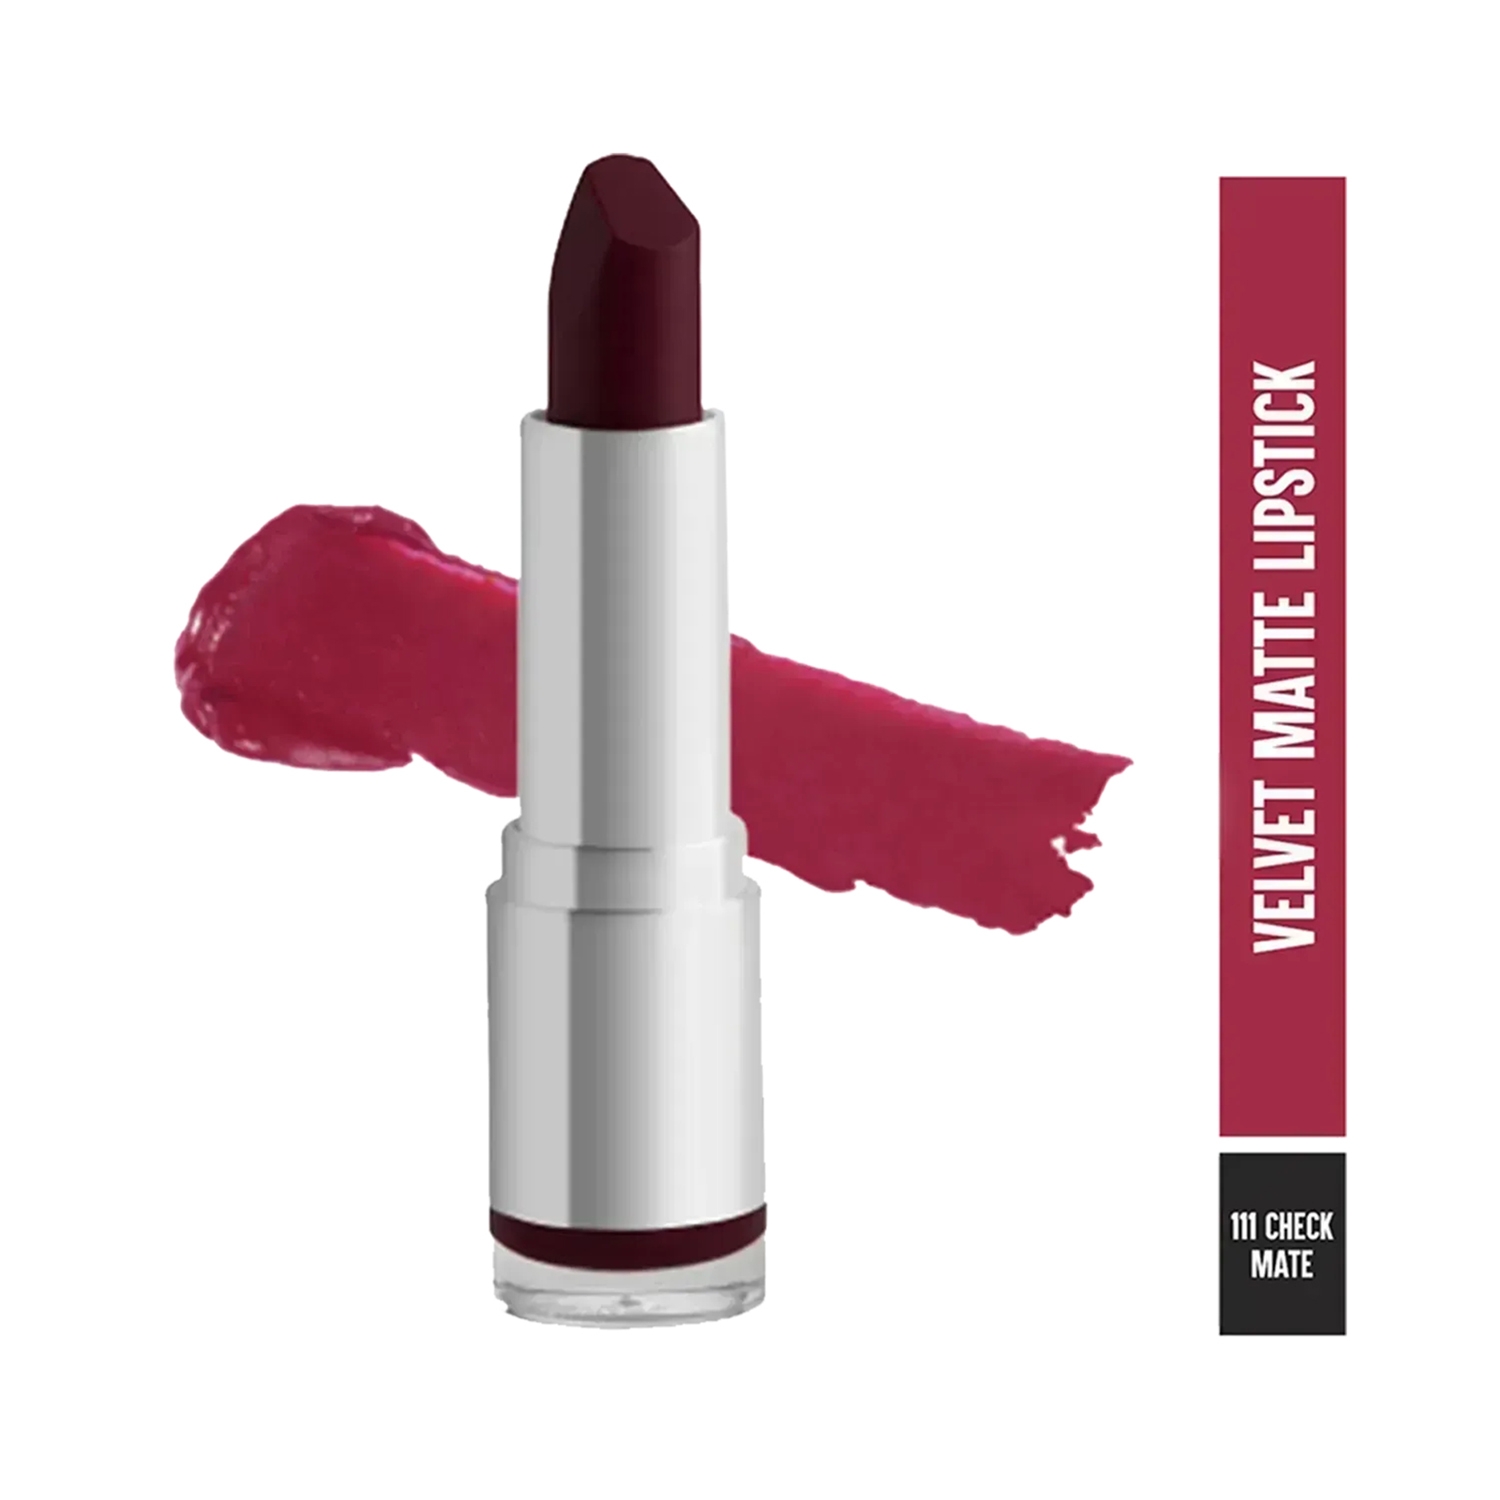 Colorbar Velvet Matte Lipstick - 111 Check Mate (4.2gm)